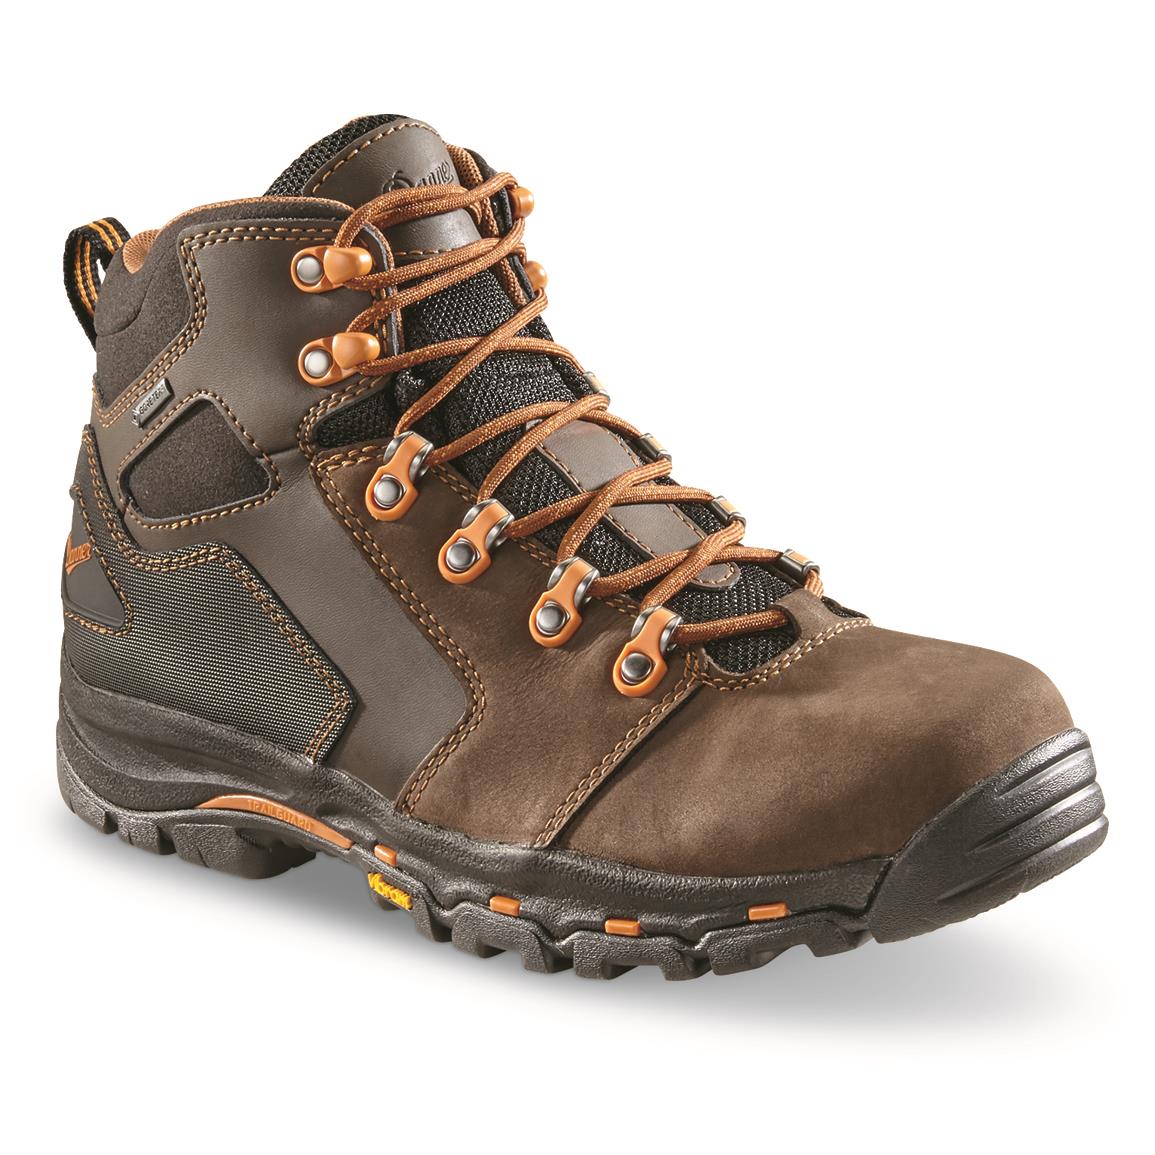 Danner Men's Vicious Waterproof 4.5" Work Boots, GORE-TEX, Brown/orange